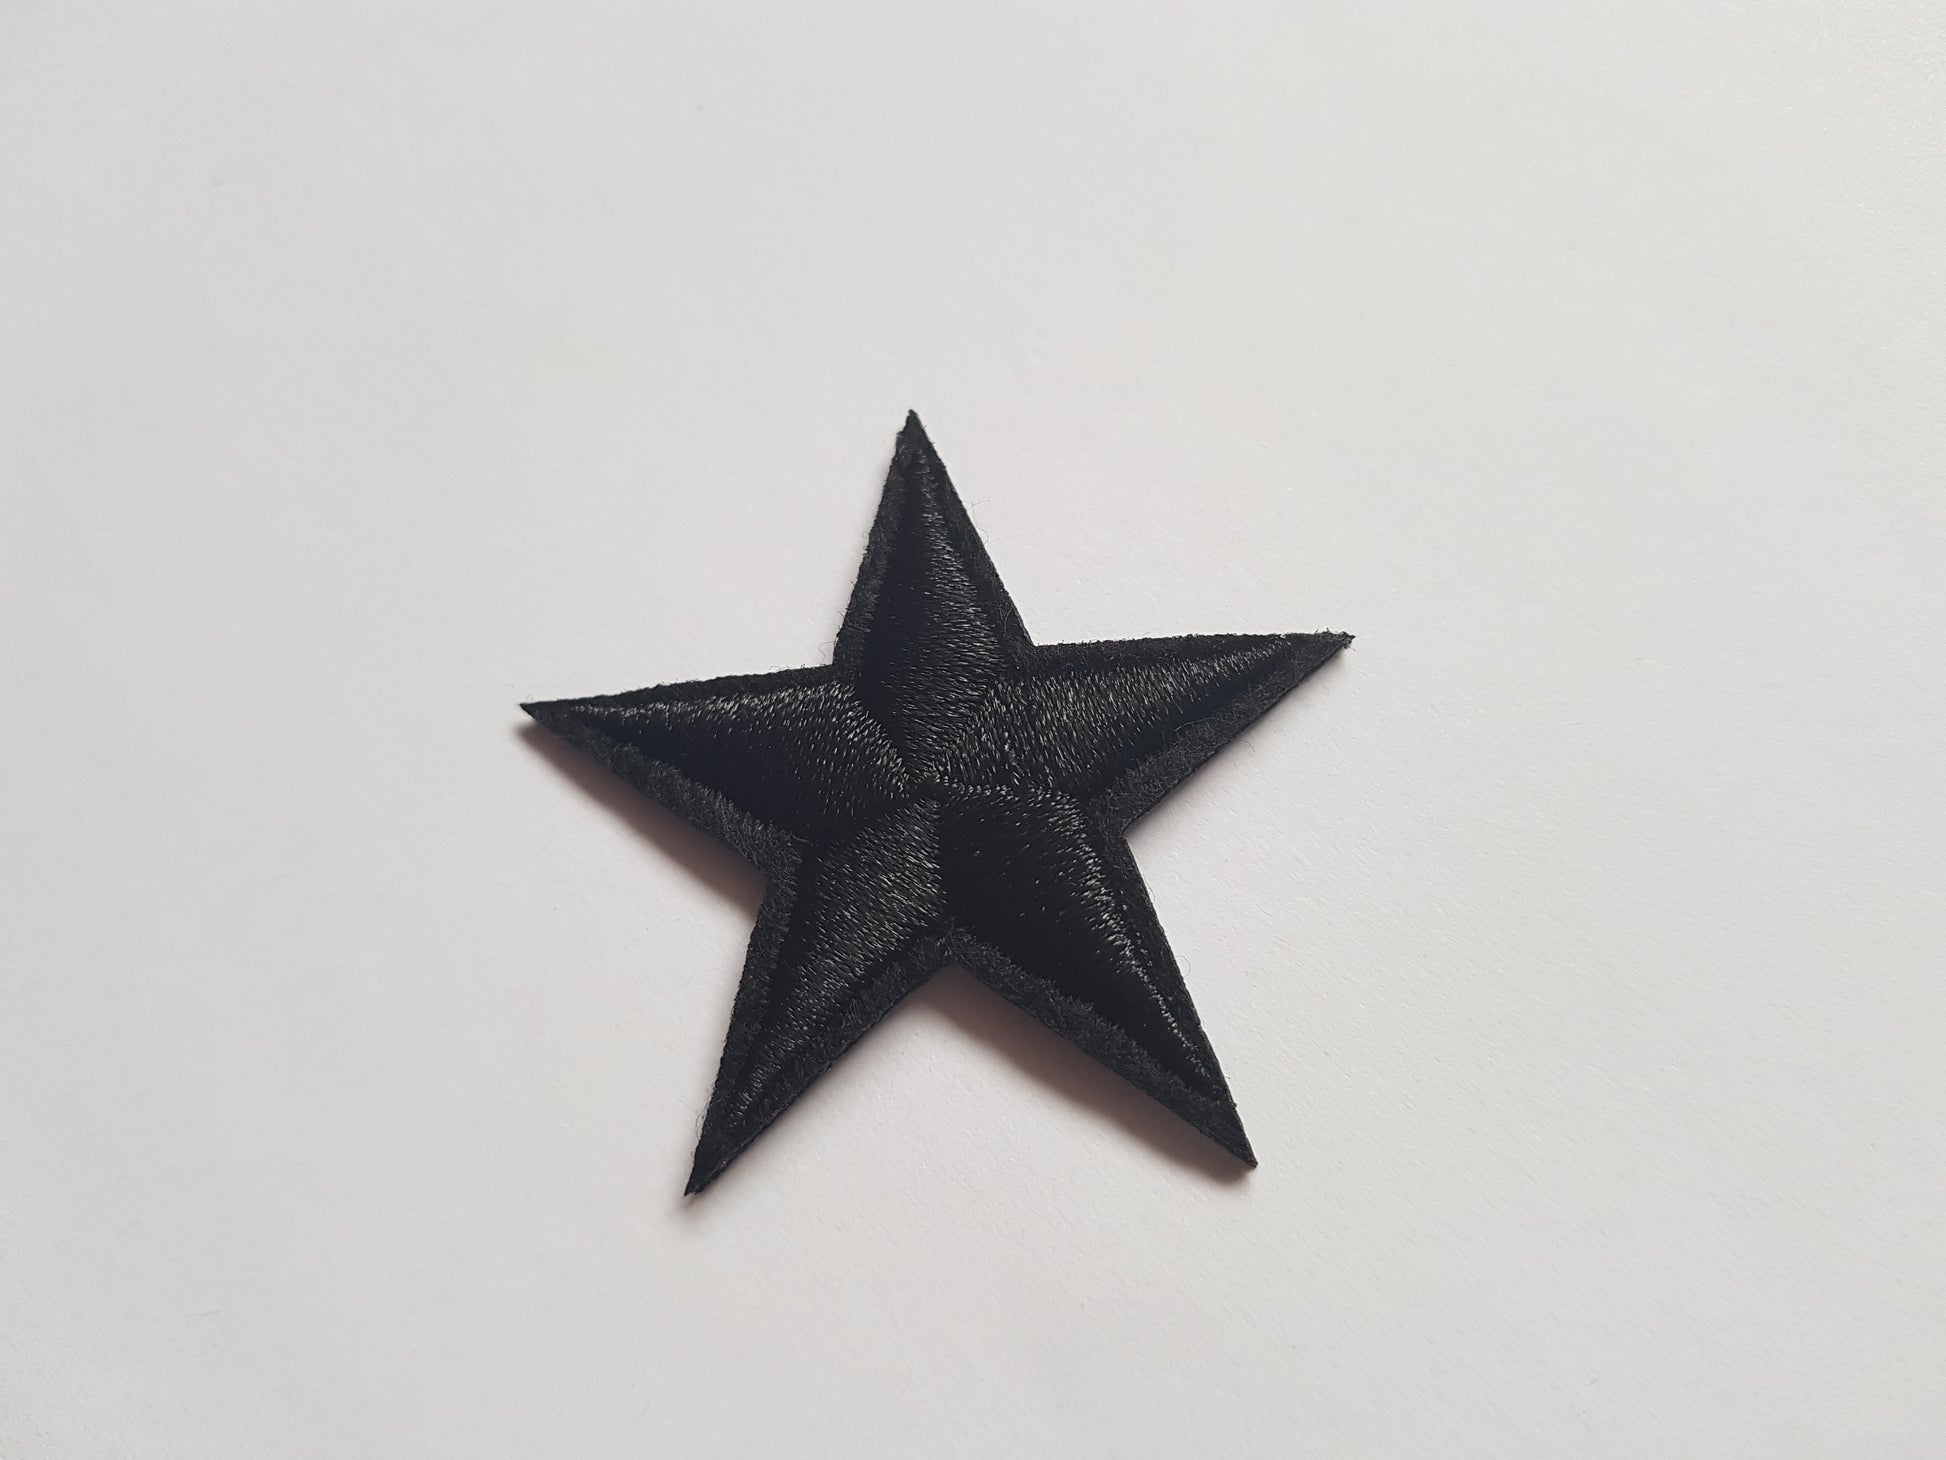 45mm star applique - black